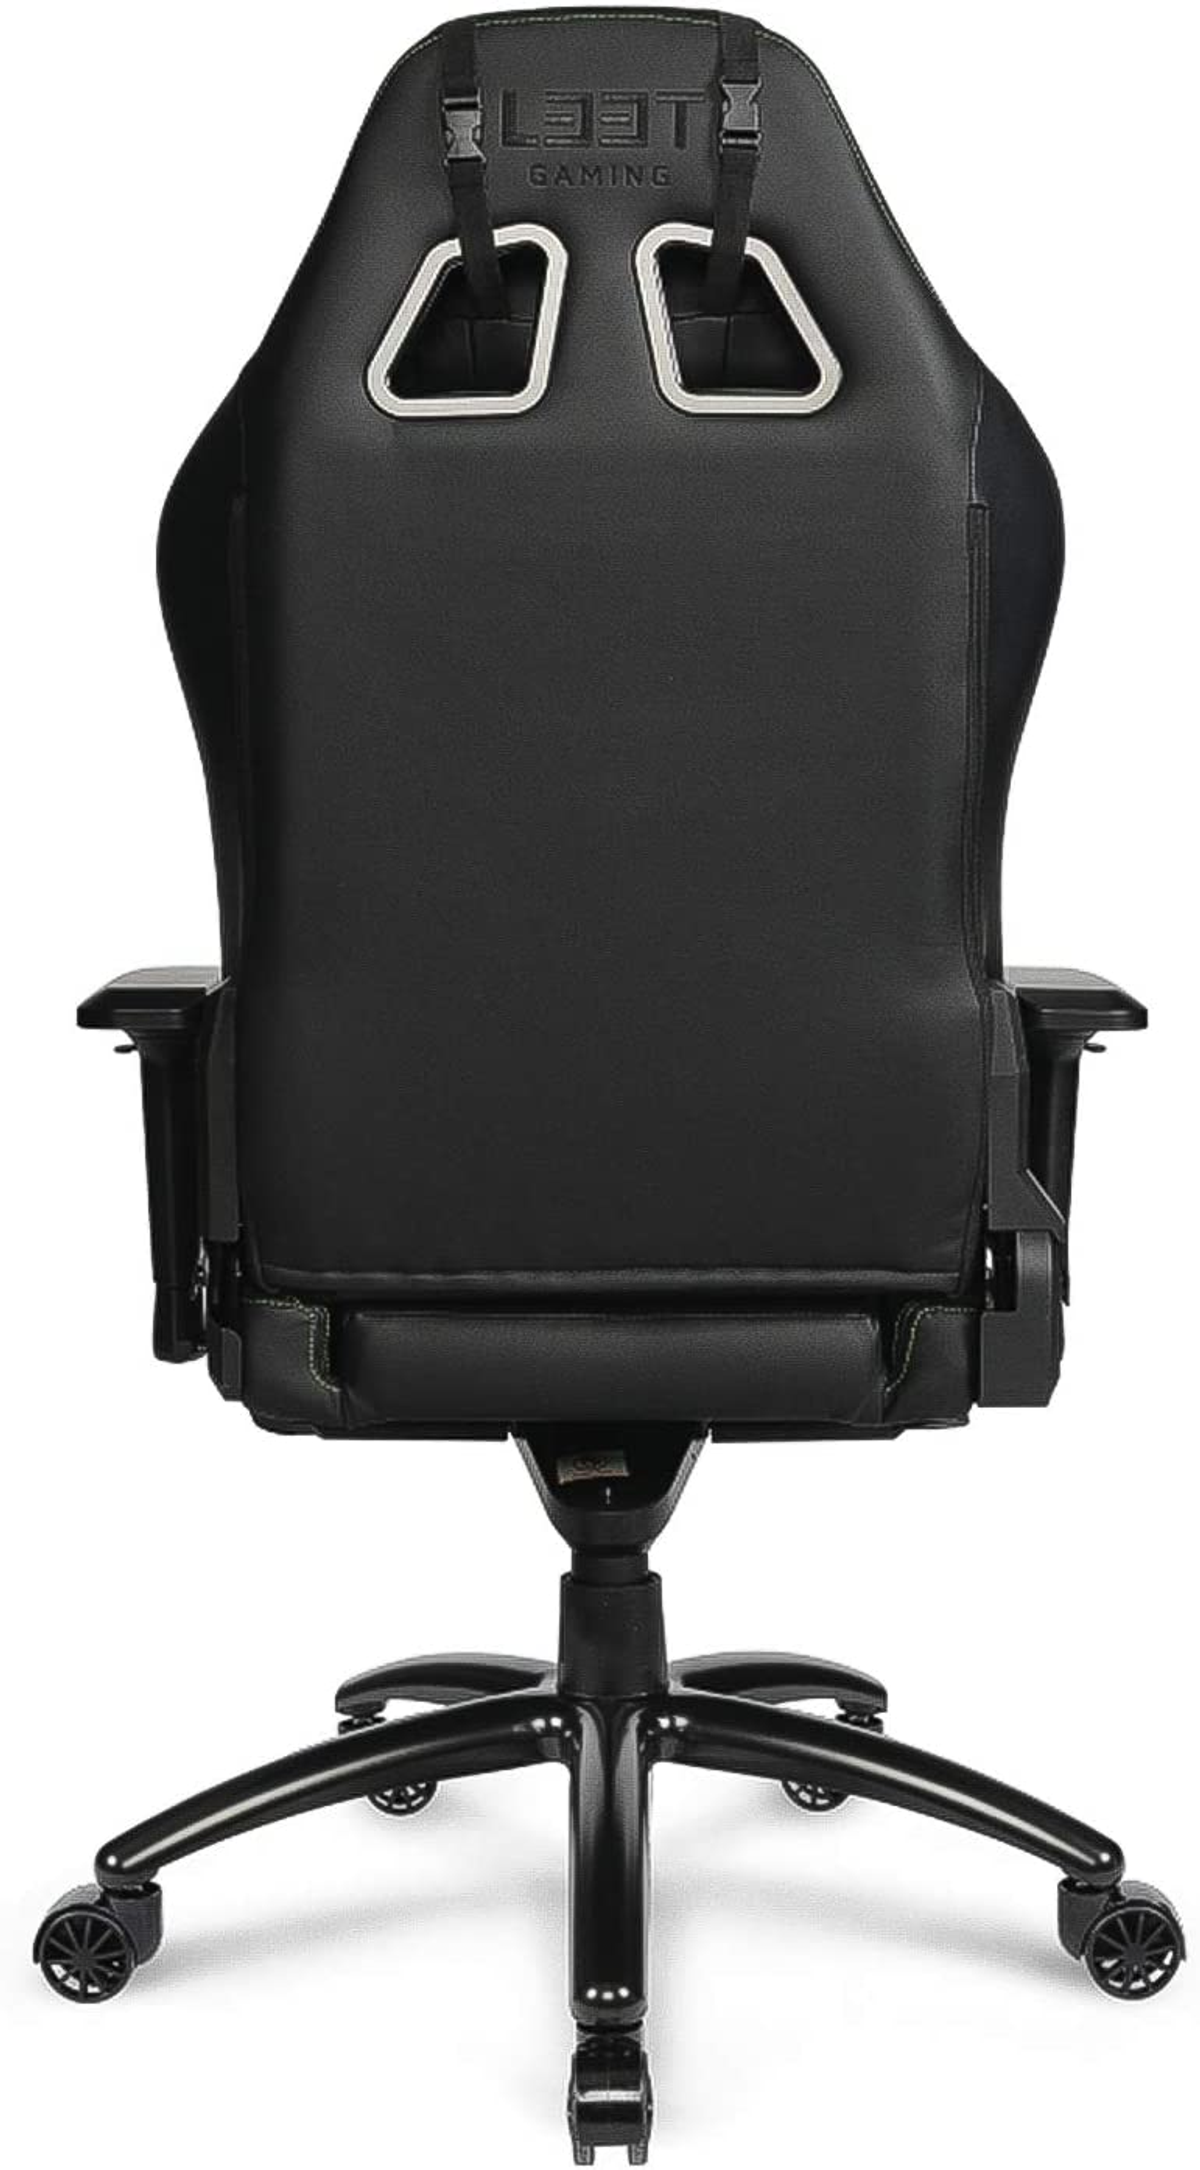 Schwarz/Grün Gaming E-Sport Stuhl, Pro L33T